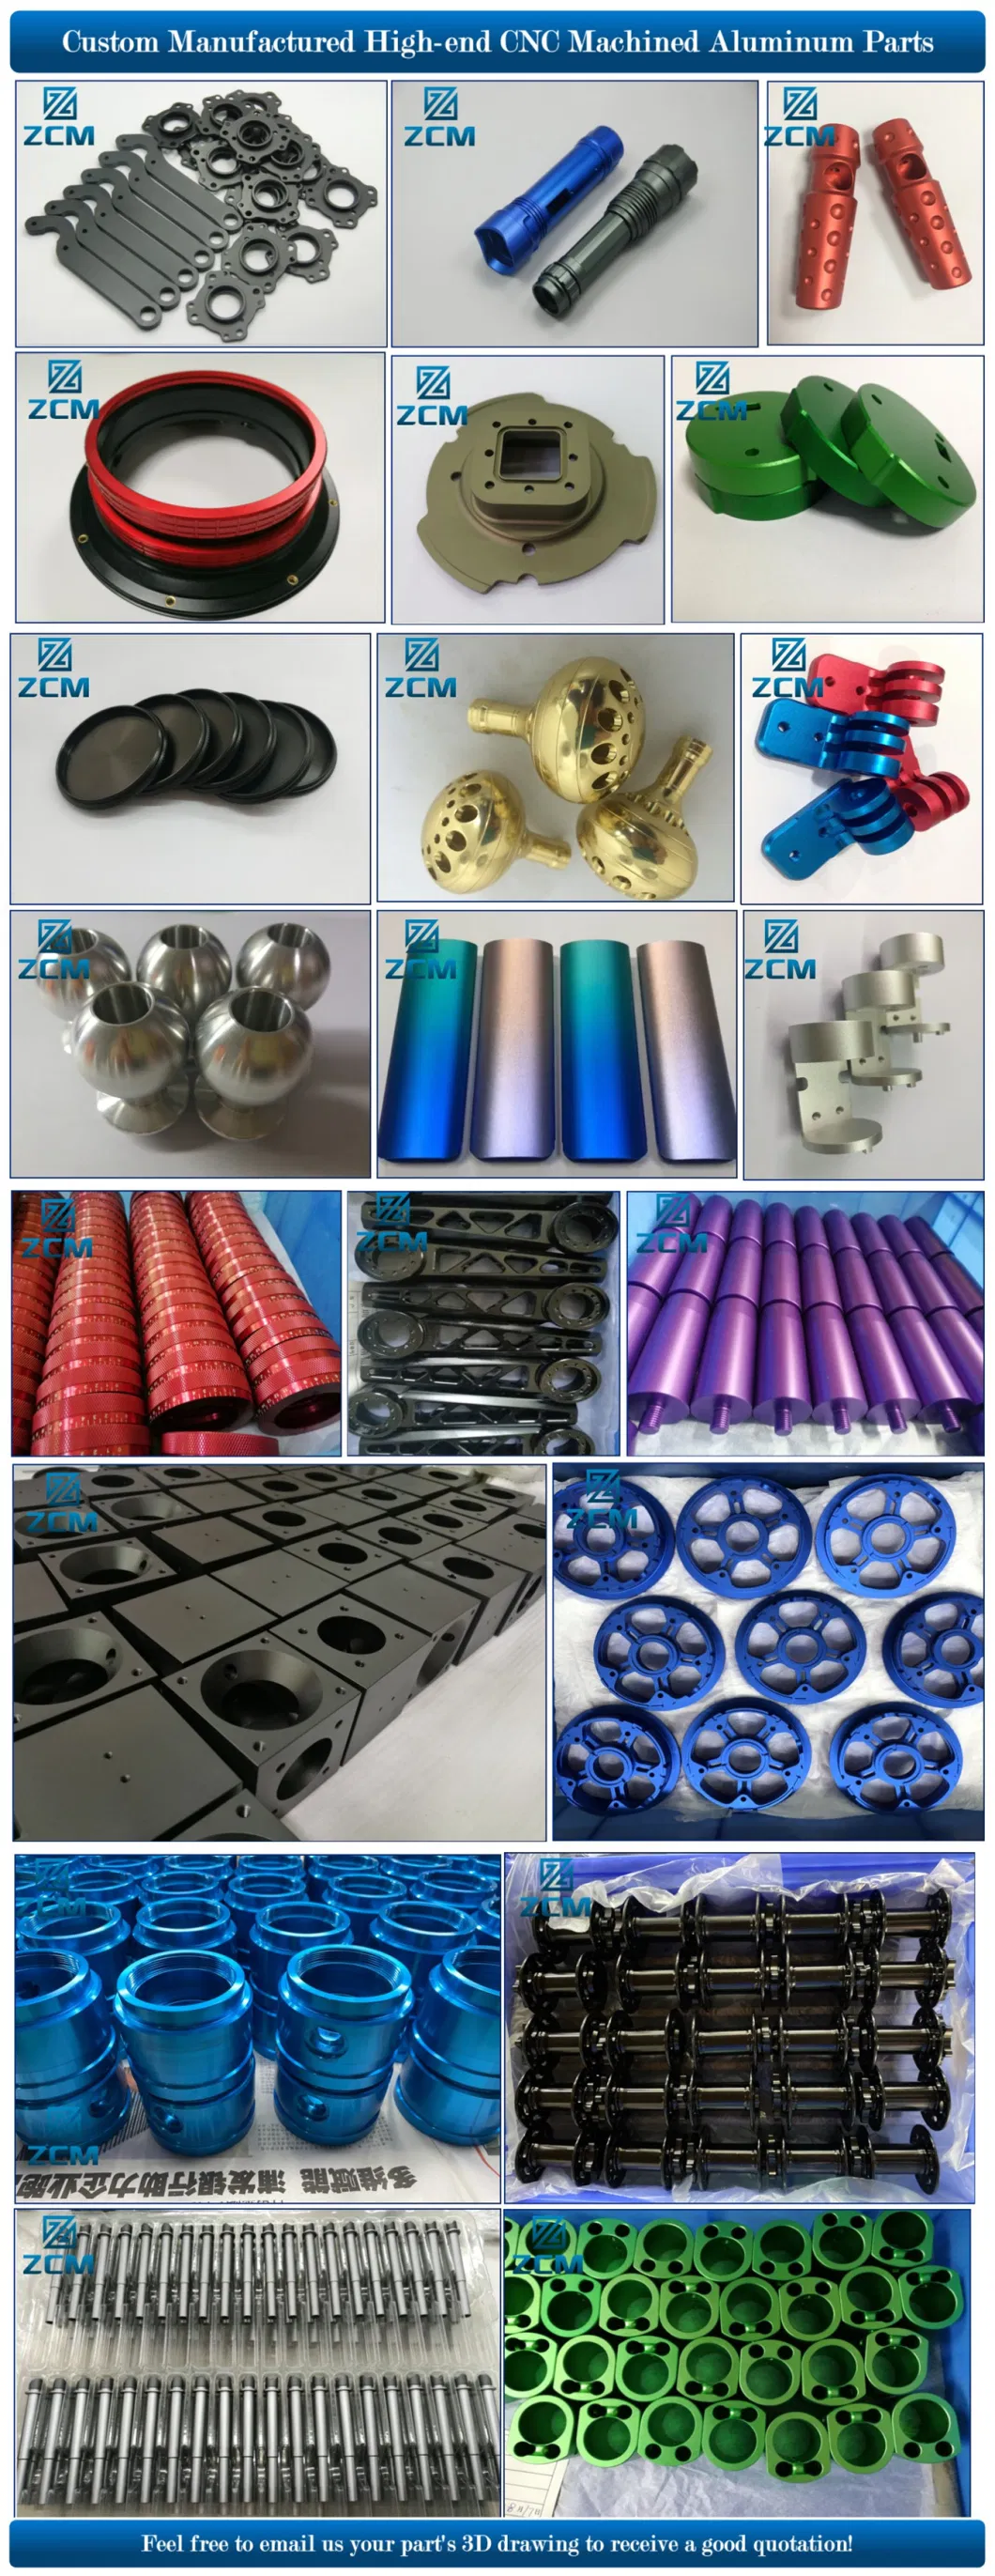 Shenzhen Custom Vehicle Car Engine Parts Manufacturing CNC Machined Round Center Hub Green Blue Anodized Aluminum Parts